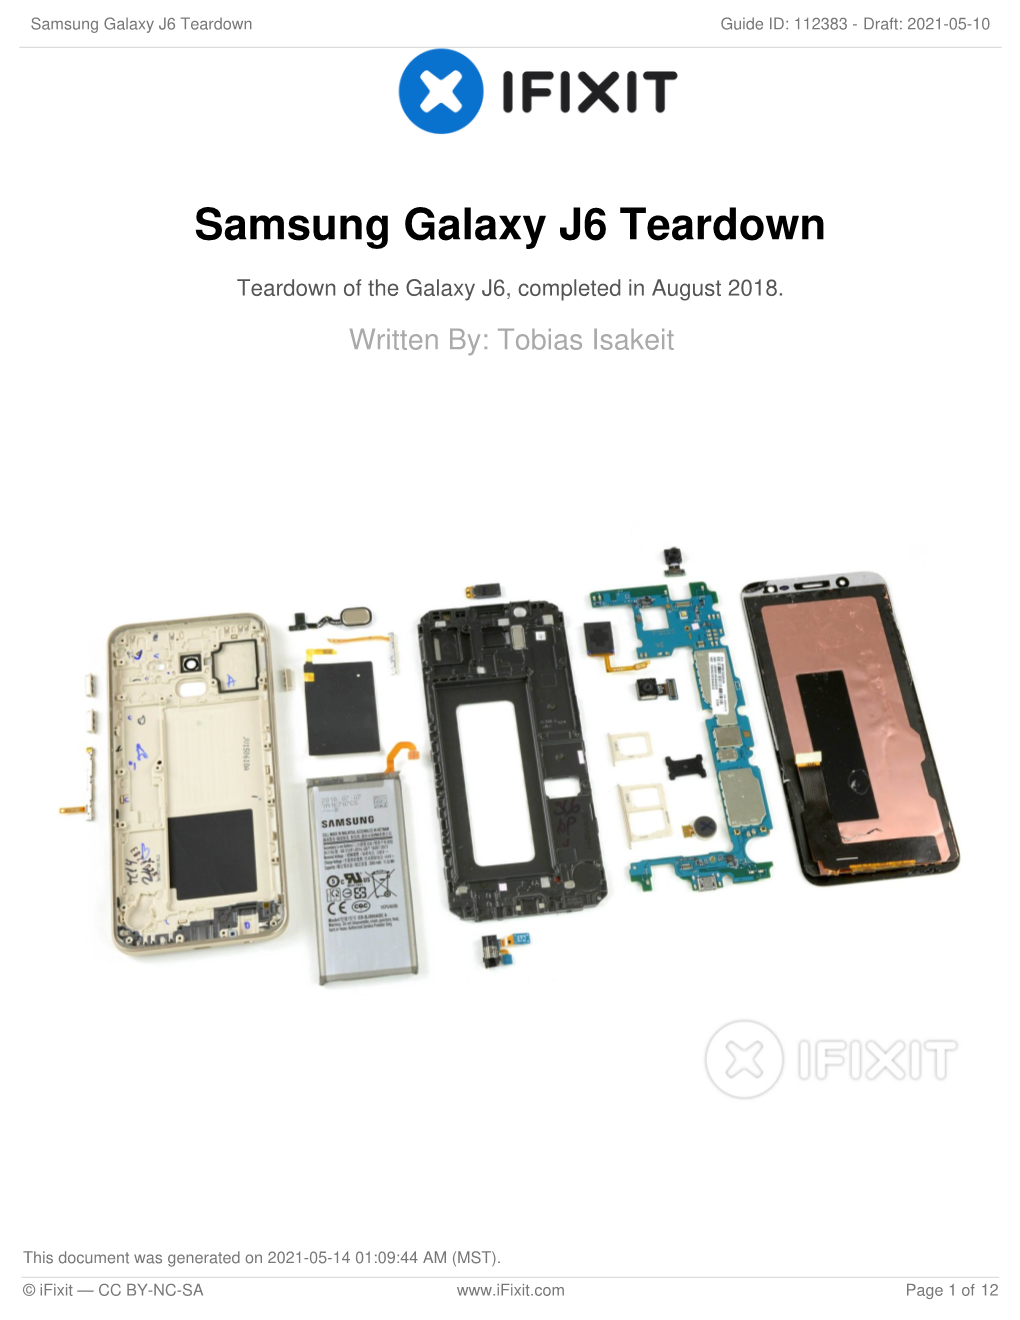 Samsung Galaxy J6 Teardown Guide ID: 112383 - Draft: 2021-05-10